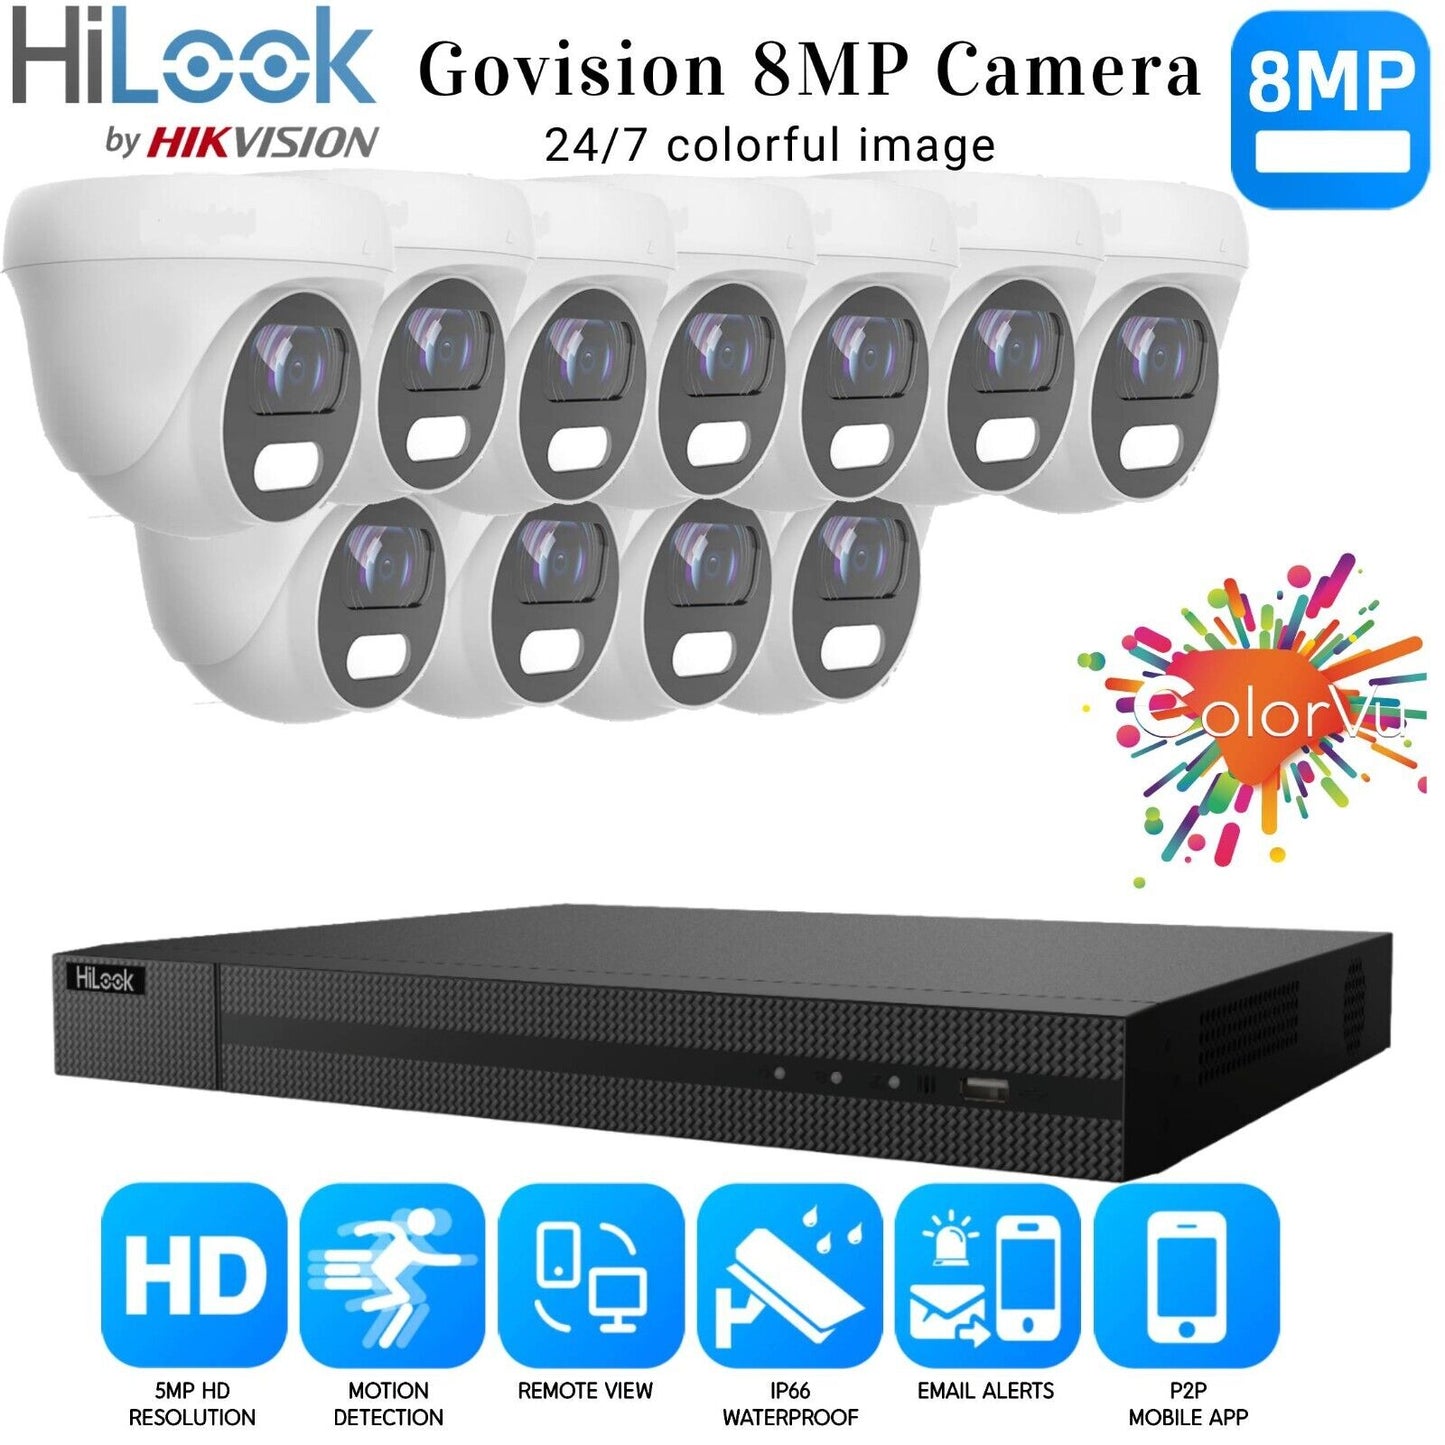 HIKVISION 8MP COLORVU CCTV SYSTEM UHD 8MP DVR 4K 24/7 COLORVu OUTDOOR CAMERA KIT 16CH DVR 11xCameras (white) 4TB HDD